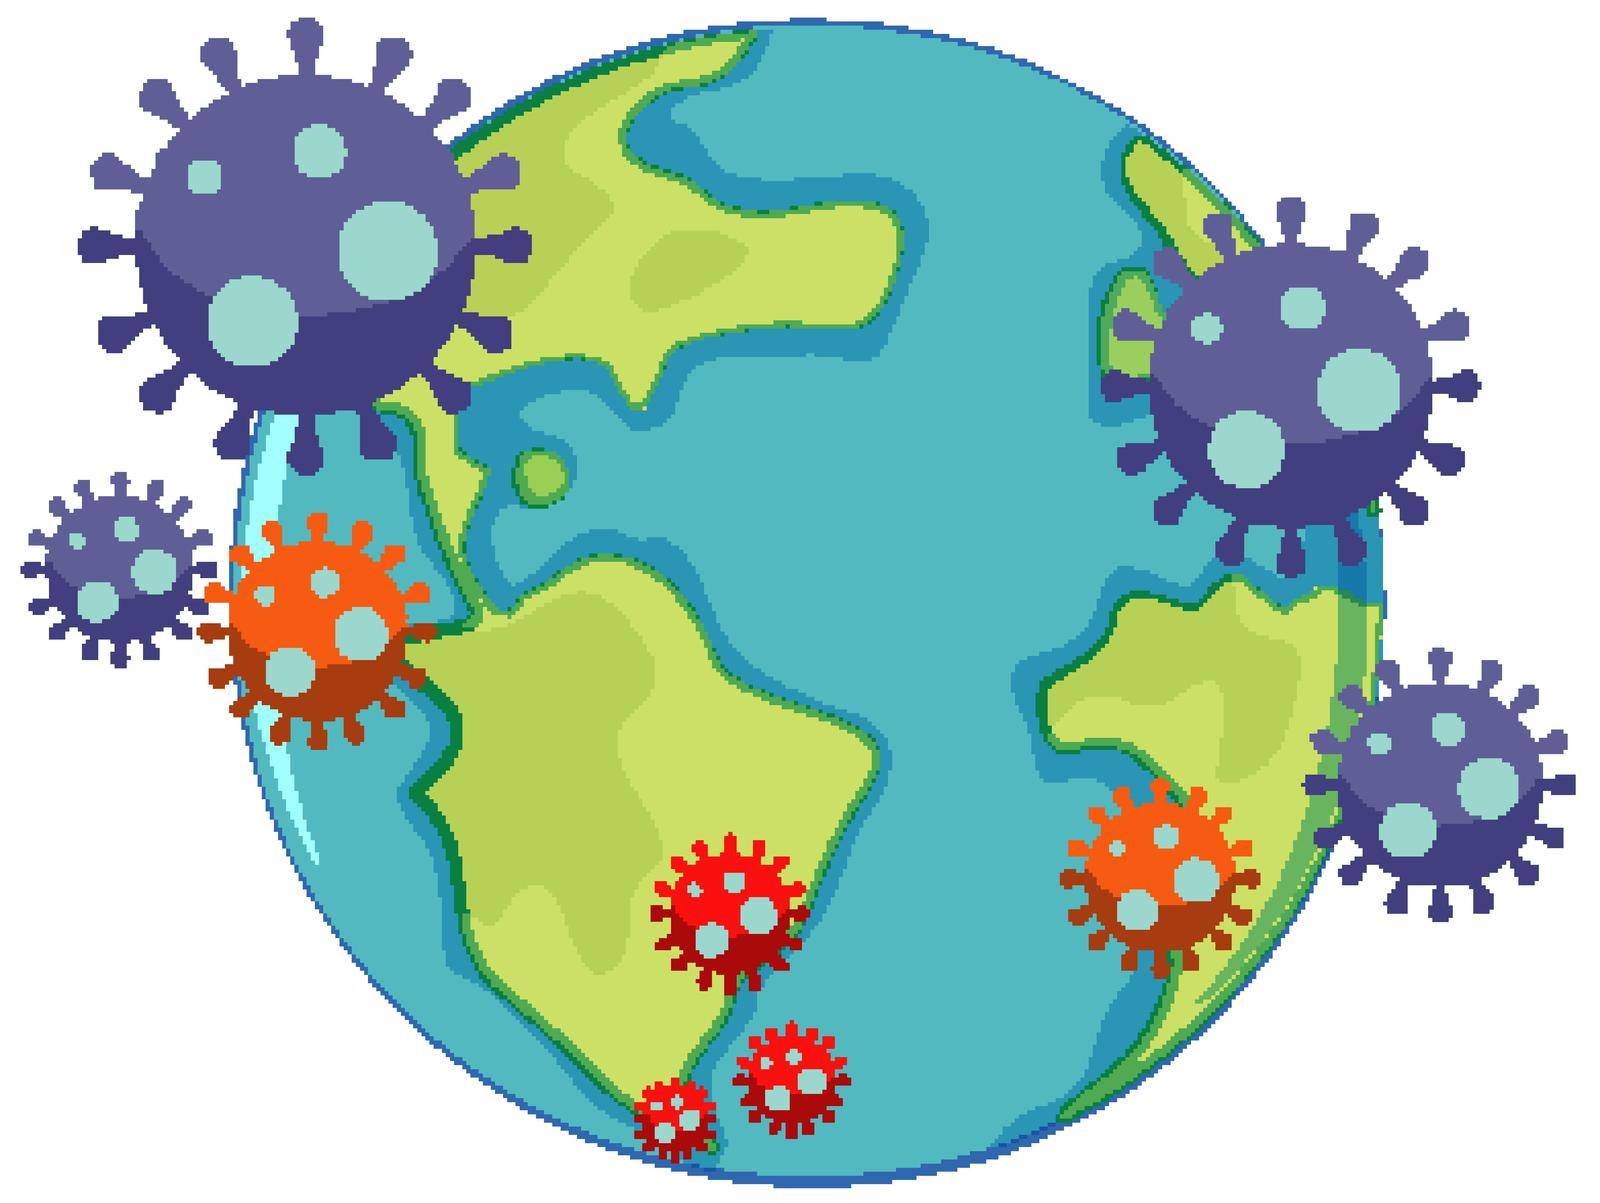 Coronavirus icon with earth globe icon by iimages